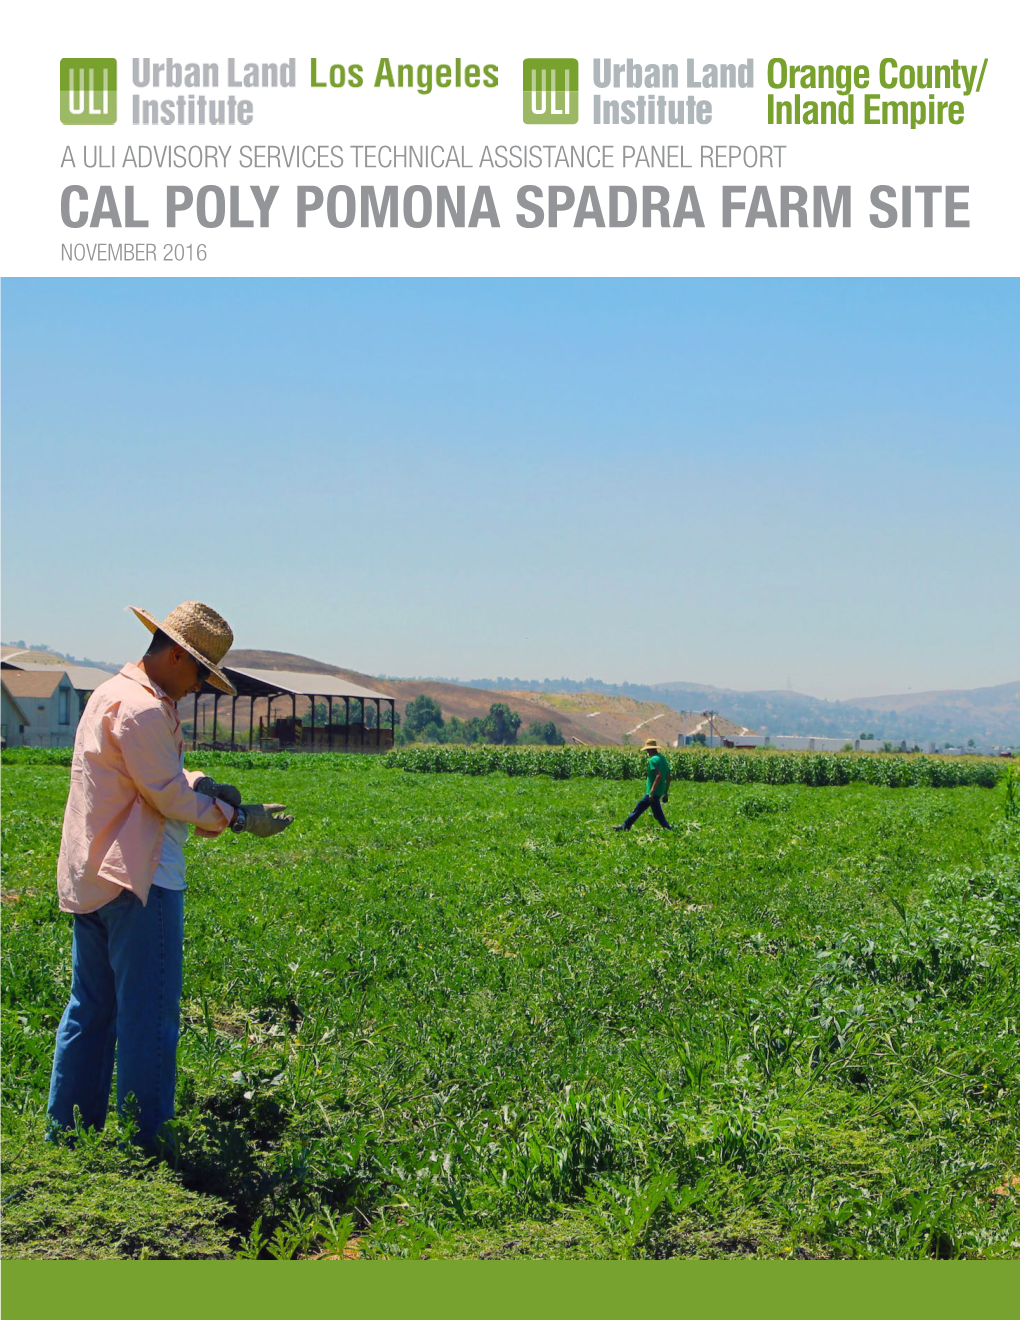 Spadra Farm Site